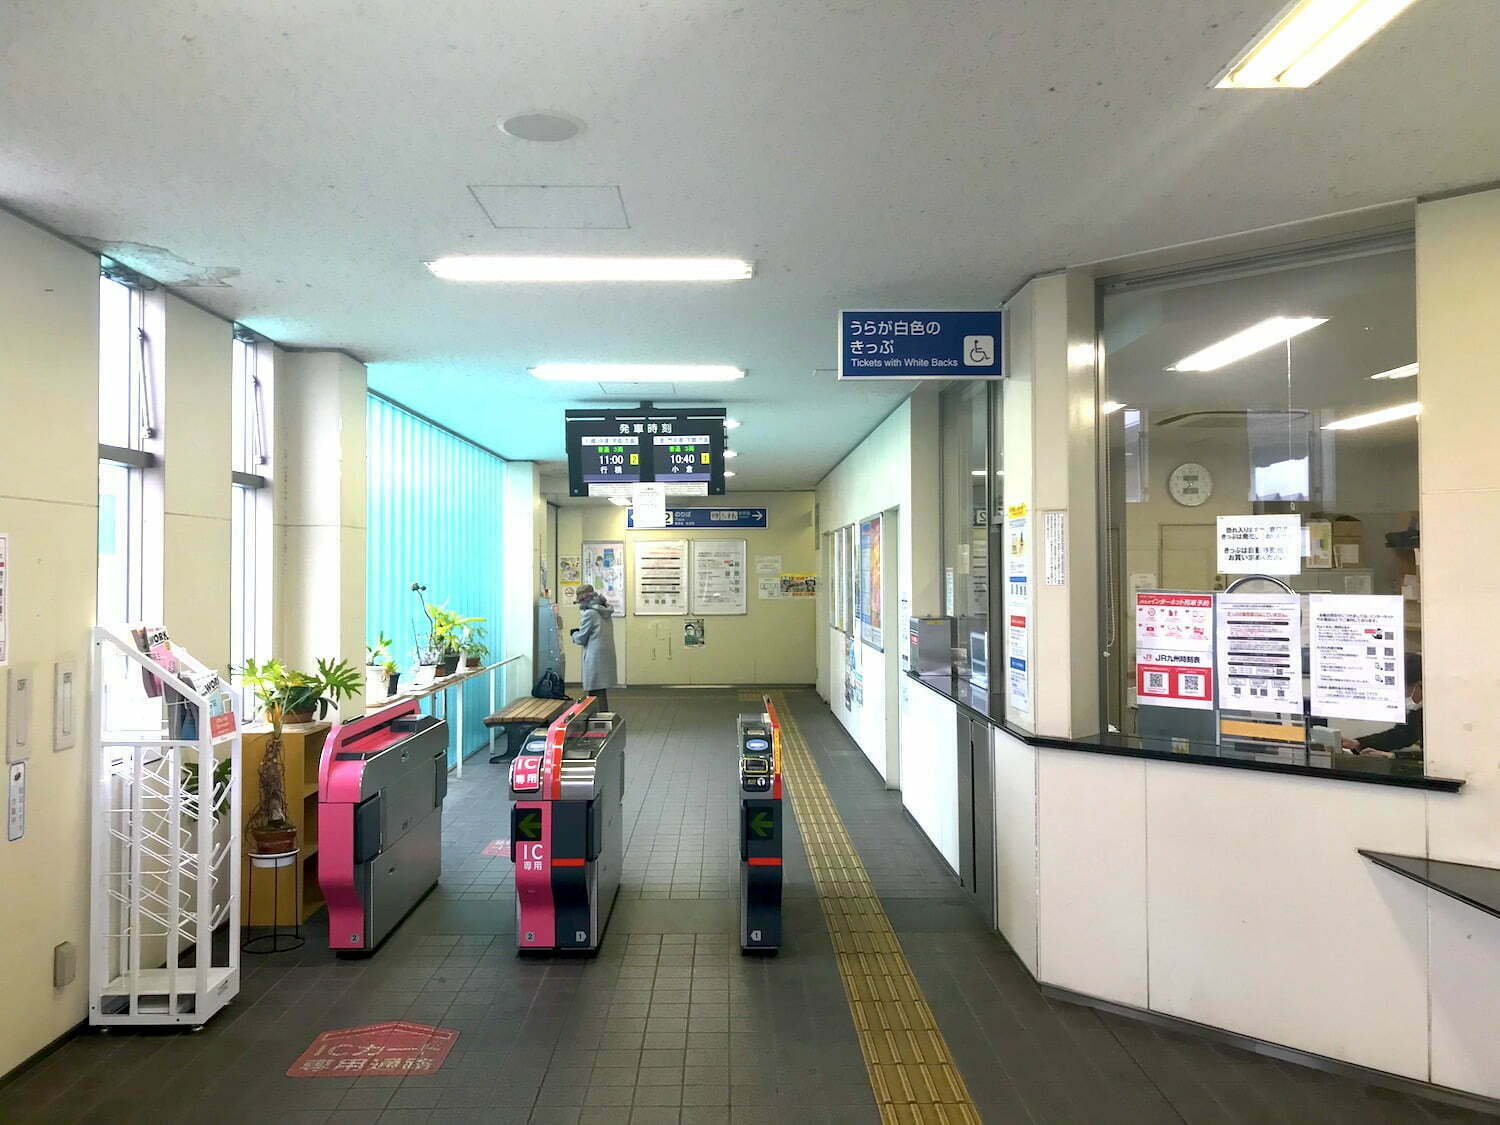 Kusami Station